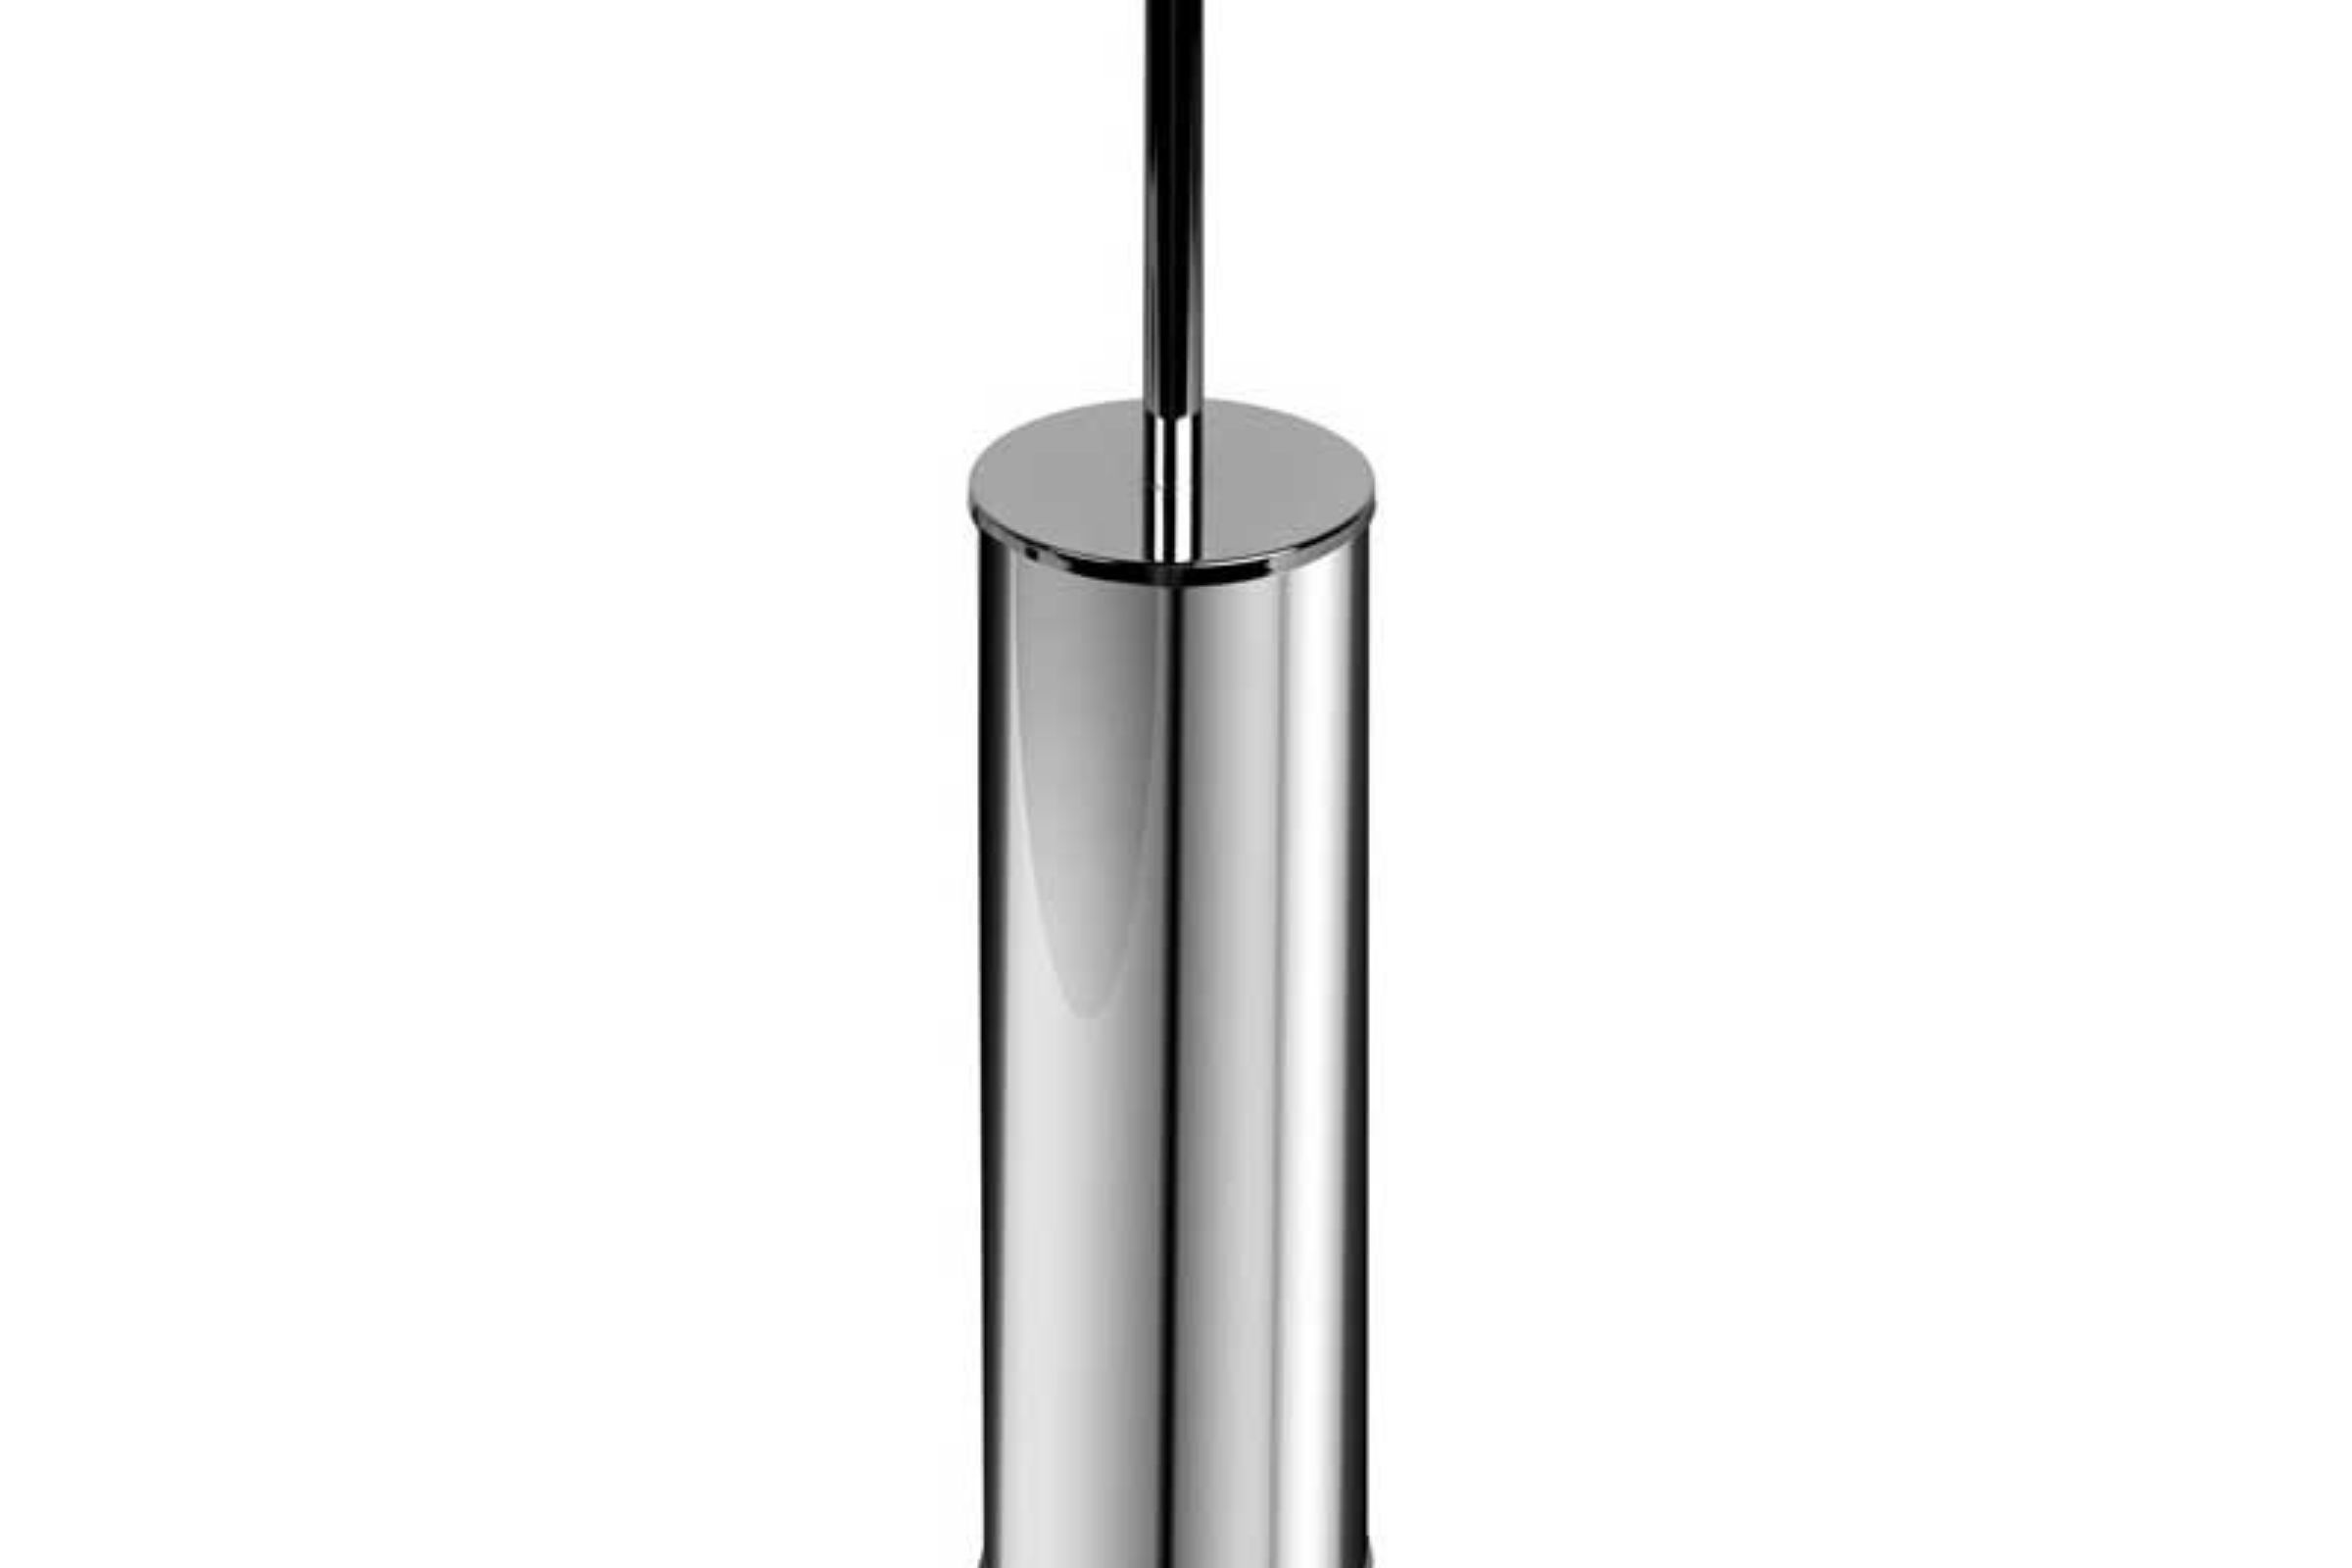 porta scopino metallo appoggio fl oor standing toilet brush holder in metal cm. 8x8x36